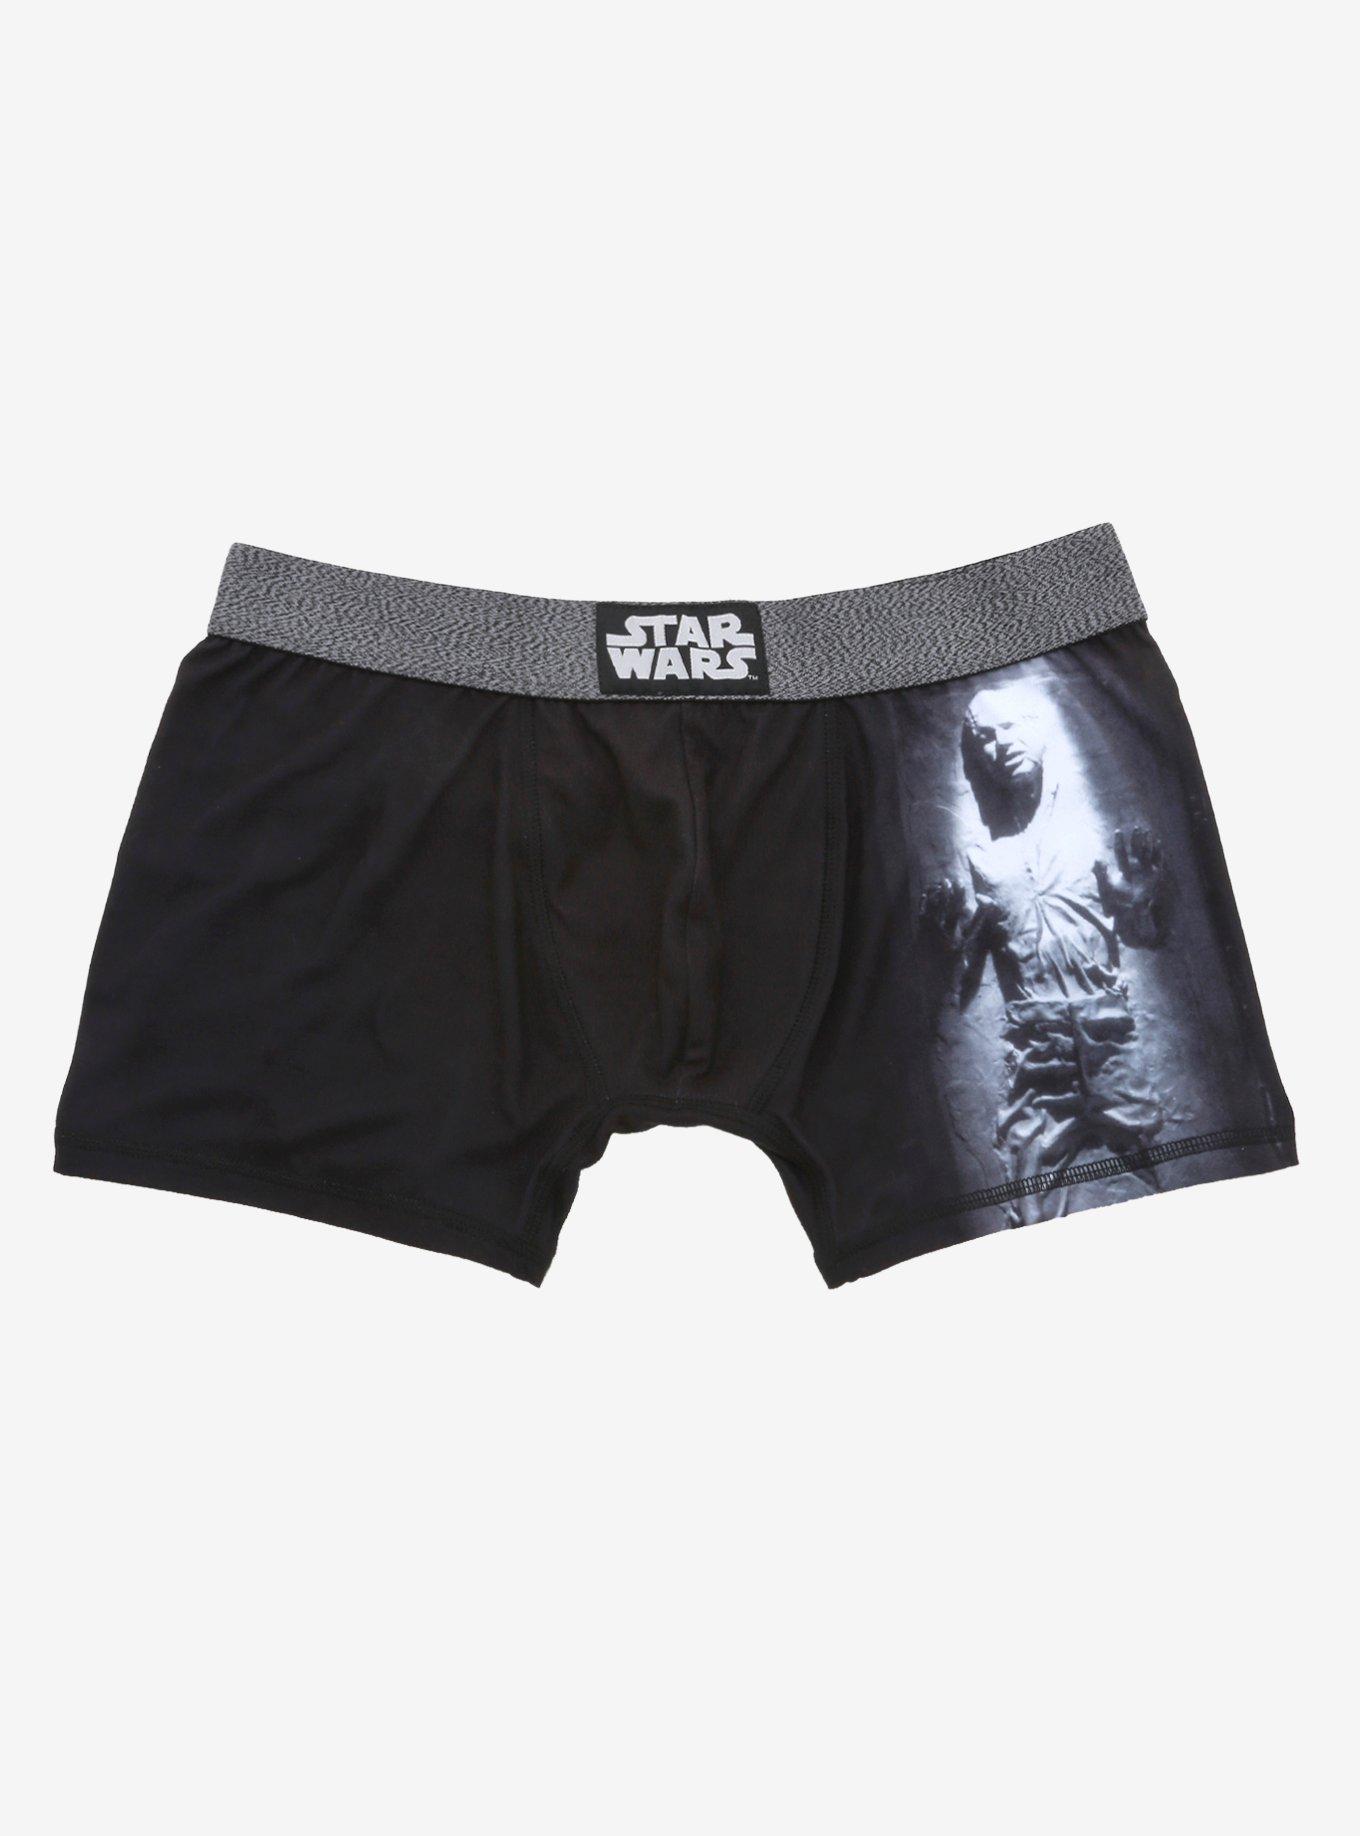 Star Wars Han Solo Carbonite Boxer Briefs, MULTI, hi-res